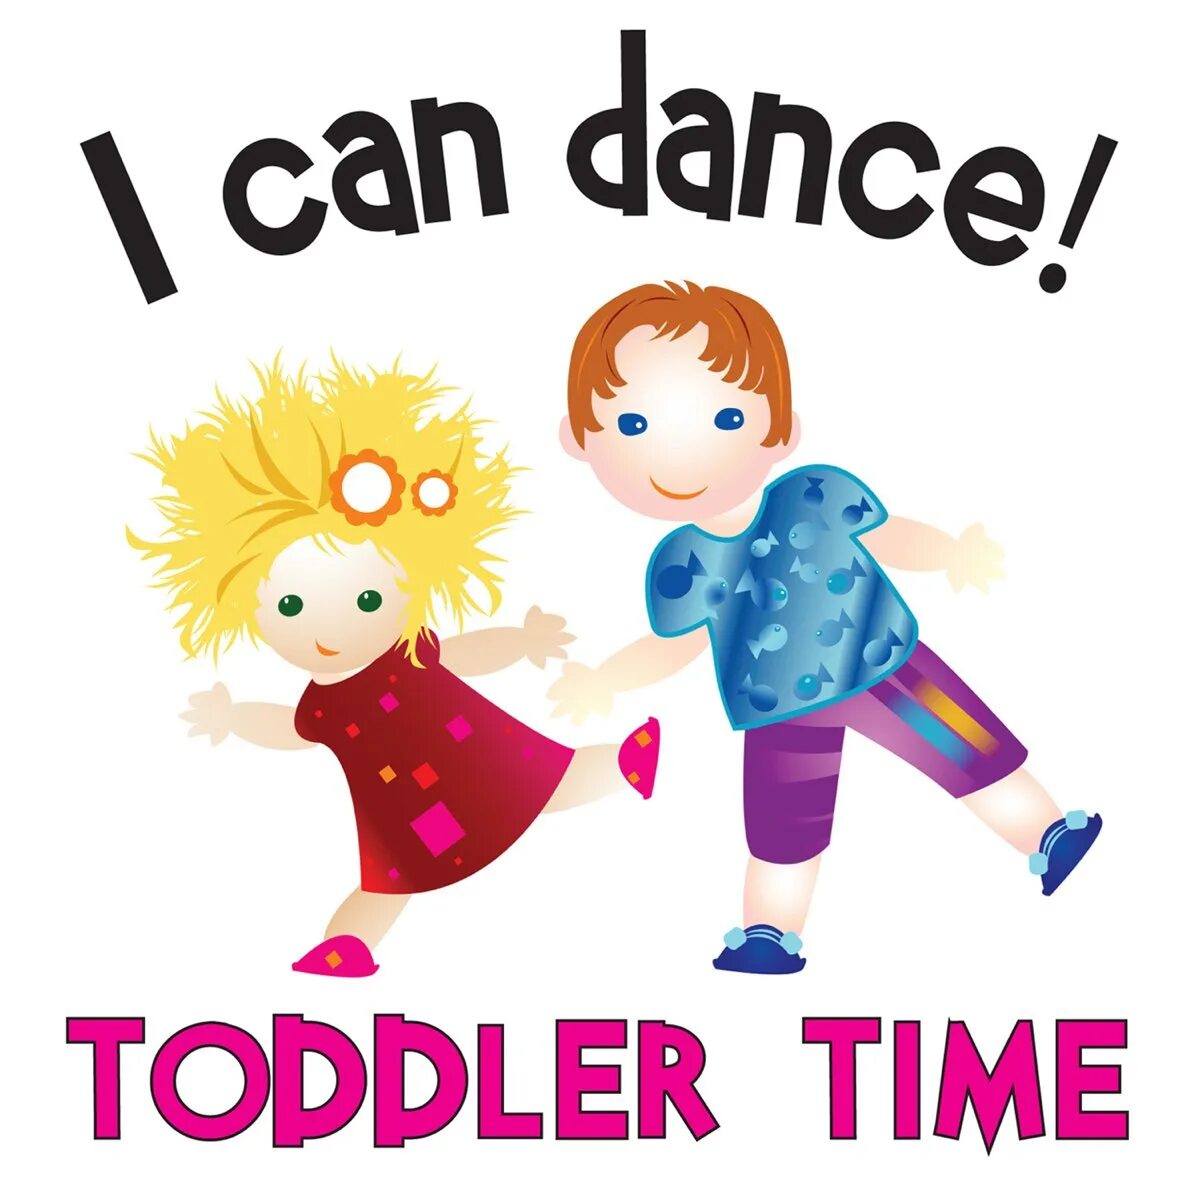 Can dance well. Dance на английском. Картинки i can. I can Dance для дошкольников. Sing and Dance рисунок для детей.